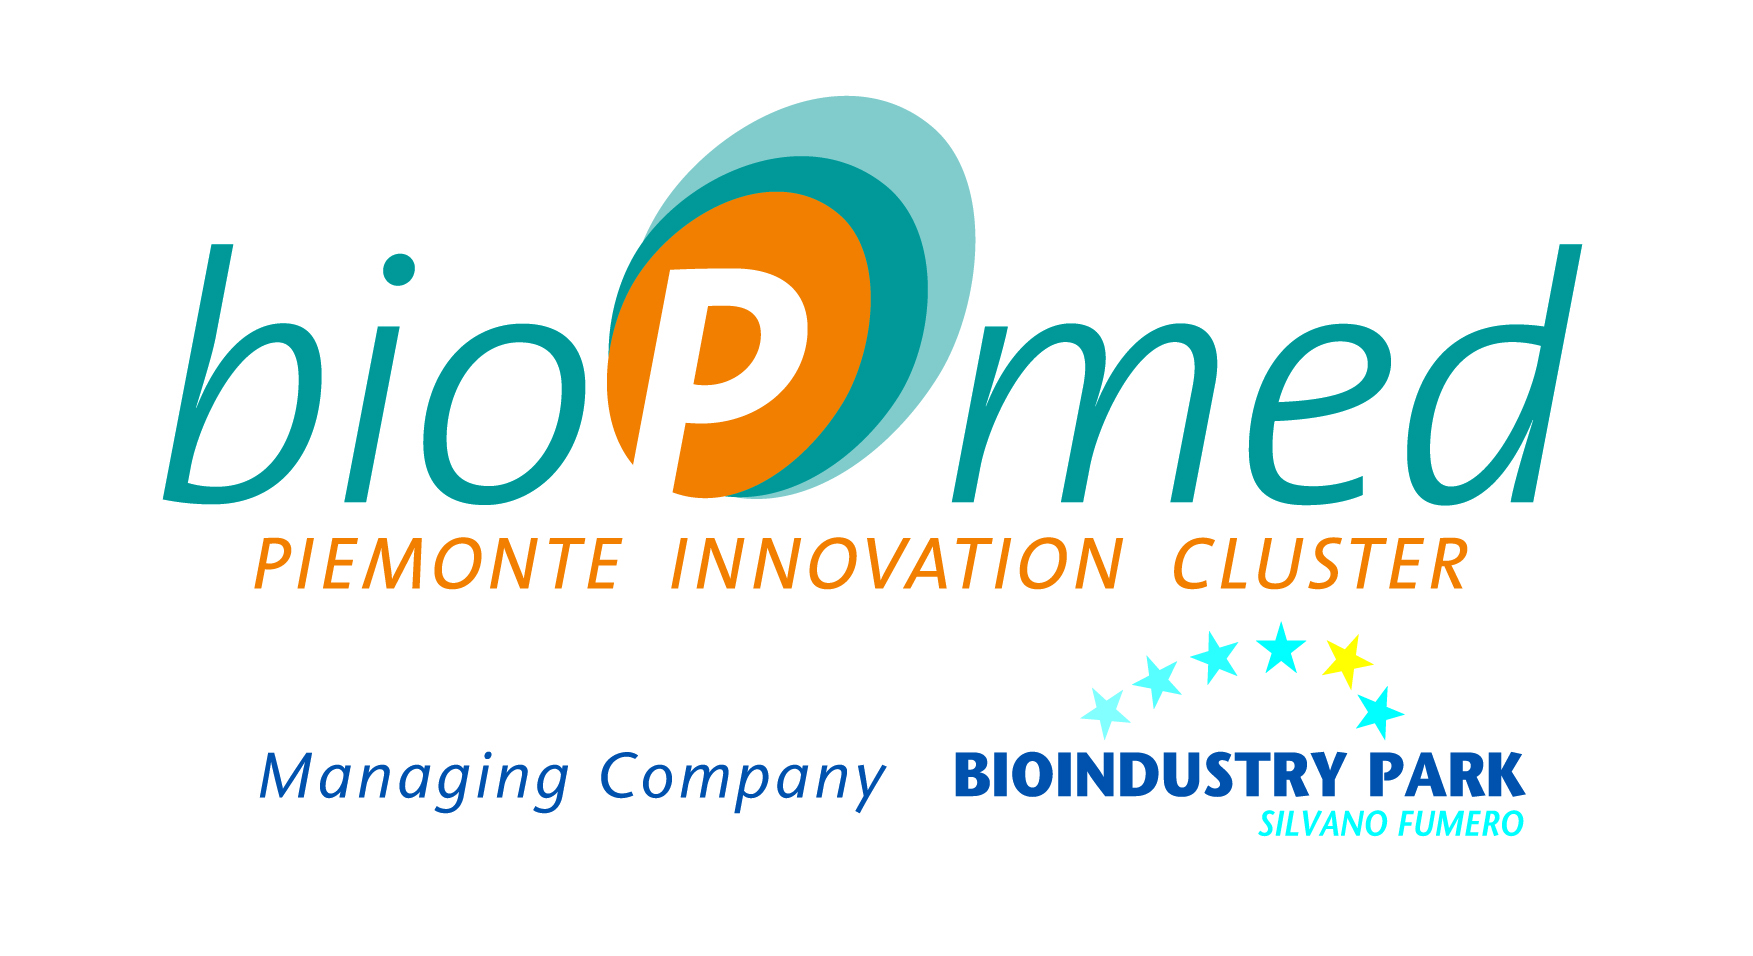 Bioindustry Park Silvano Fumero / bioPmed